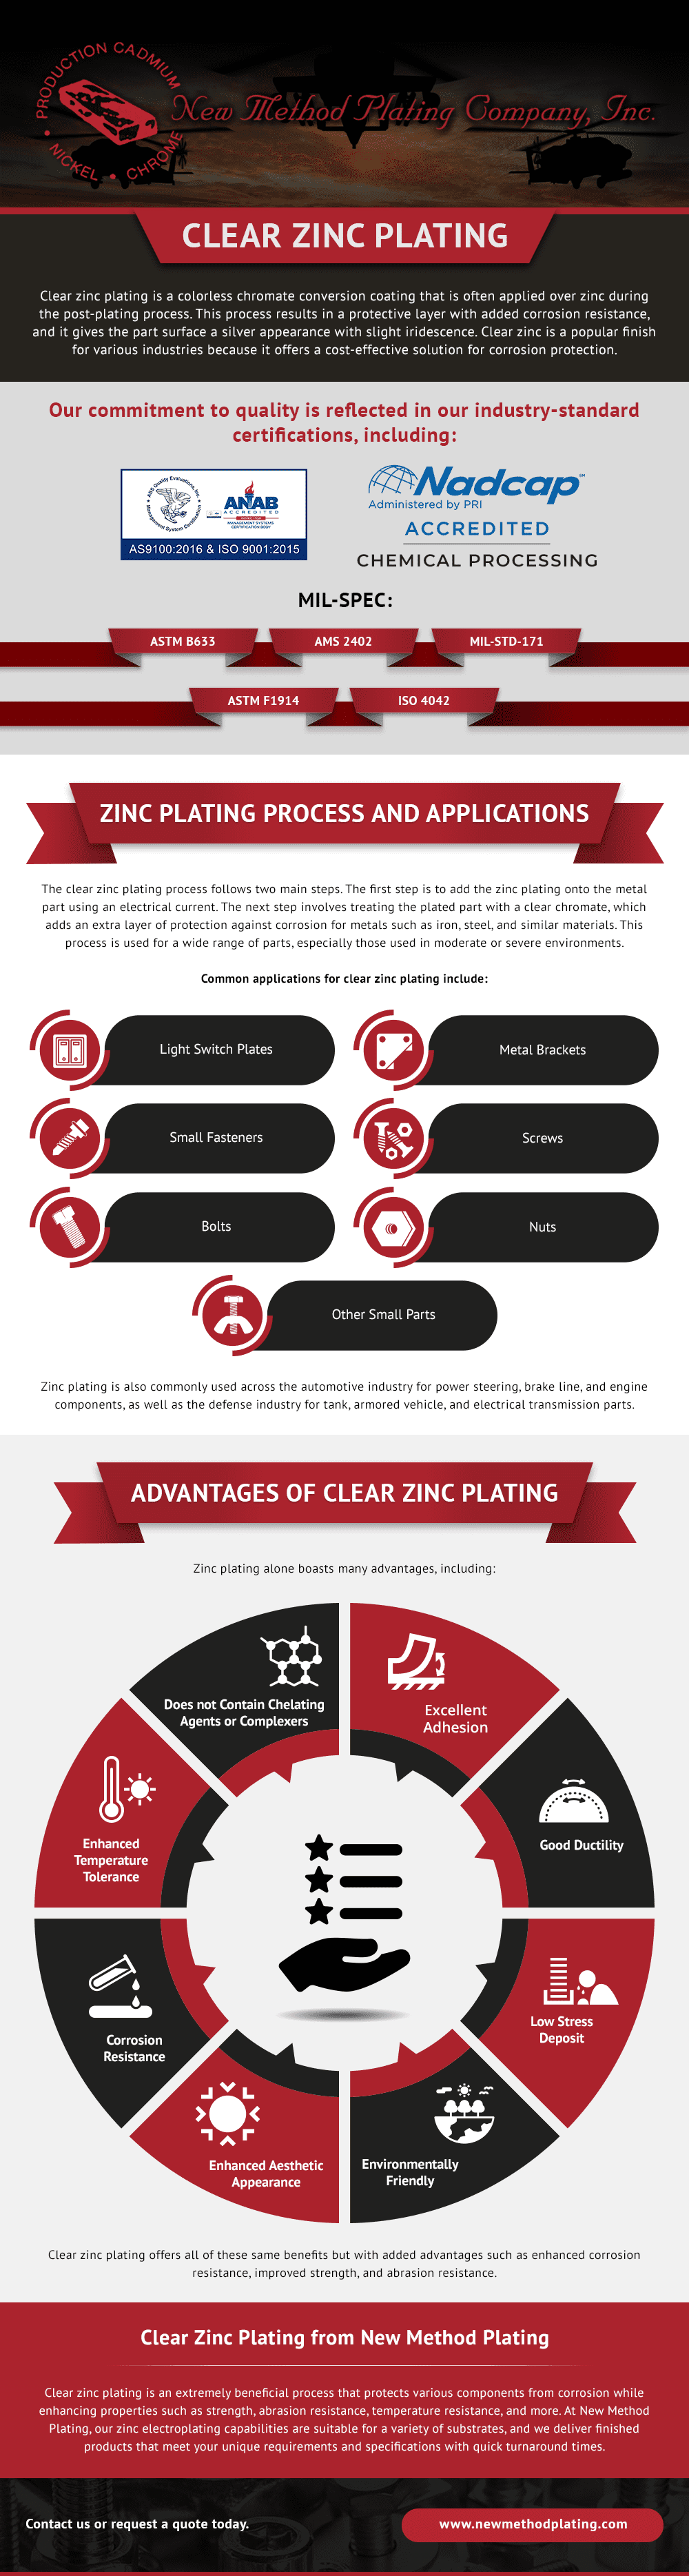 Clear Zinc Plating